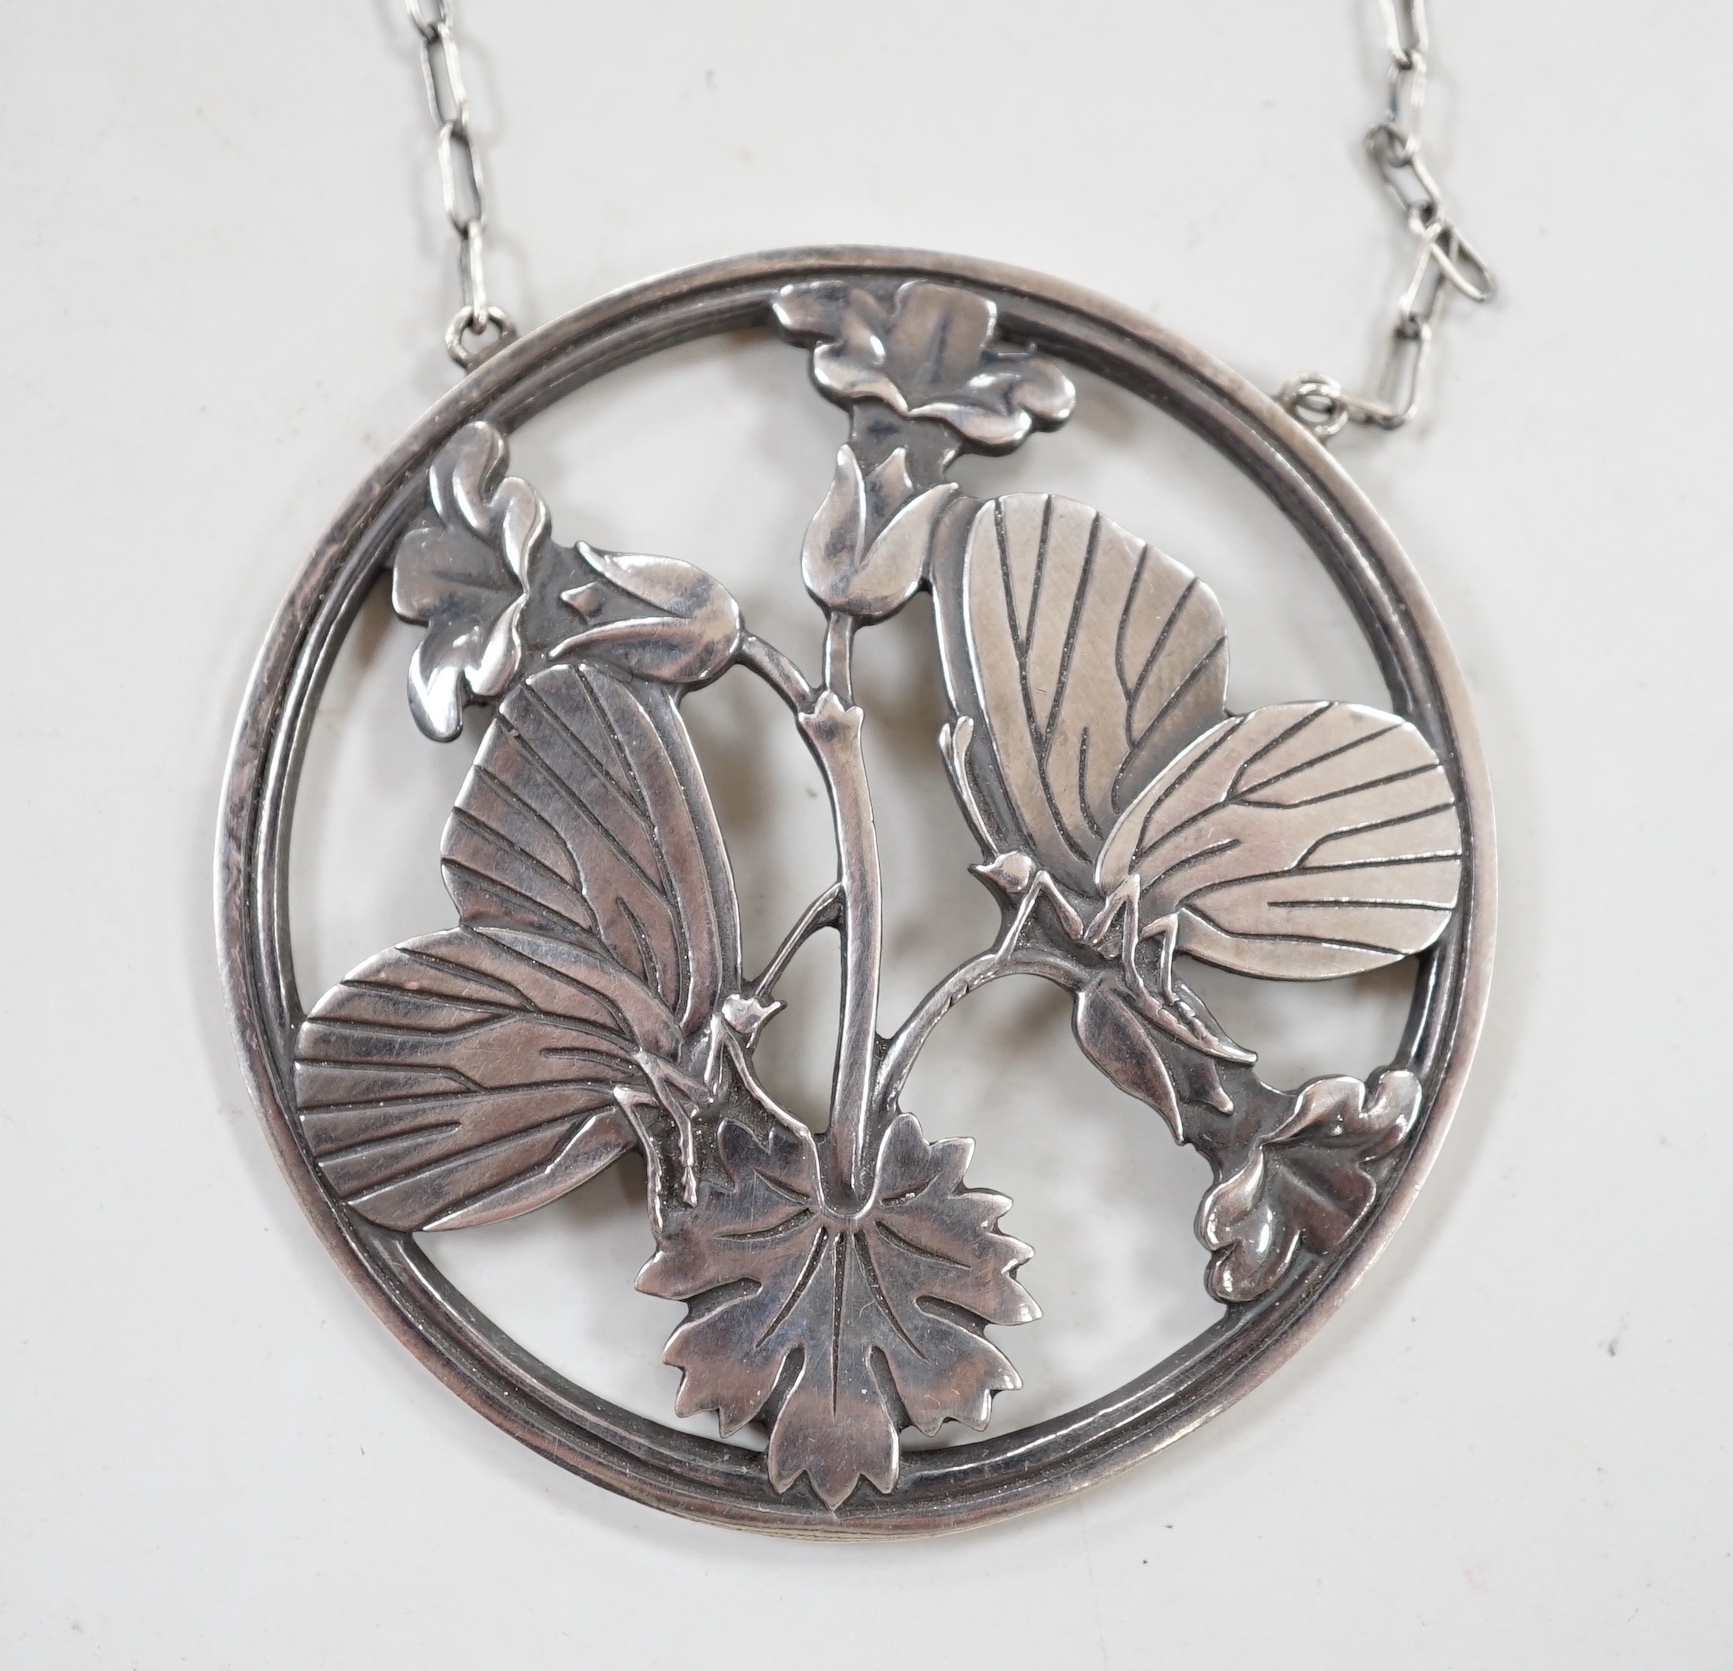 A George Jensen sterling 'Moonlight Blossom' pendant necklace, designed by Arno Malinowski, design no. 105, pendant 50mm.                                                                                                   